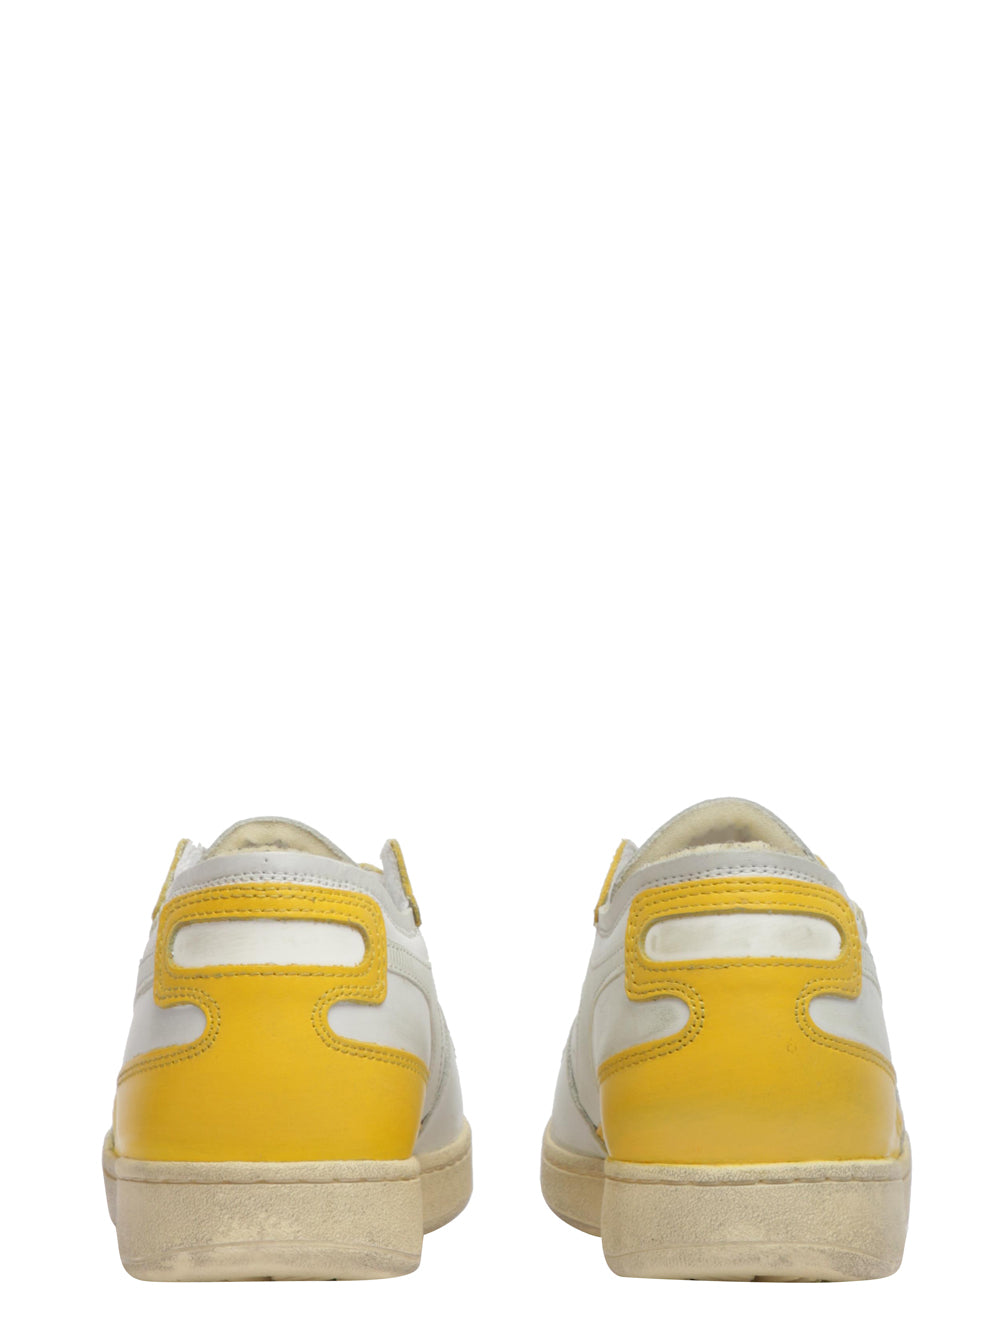 DIADORA HERITAGE Scarpe Sneakers Mi Basket Row Cut in Pelle Bianche e Gialle Bianco/giallo